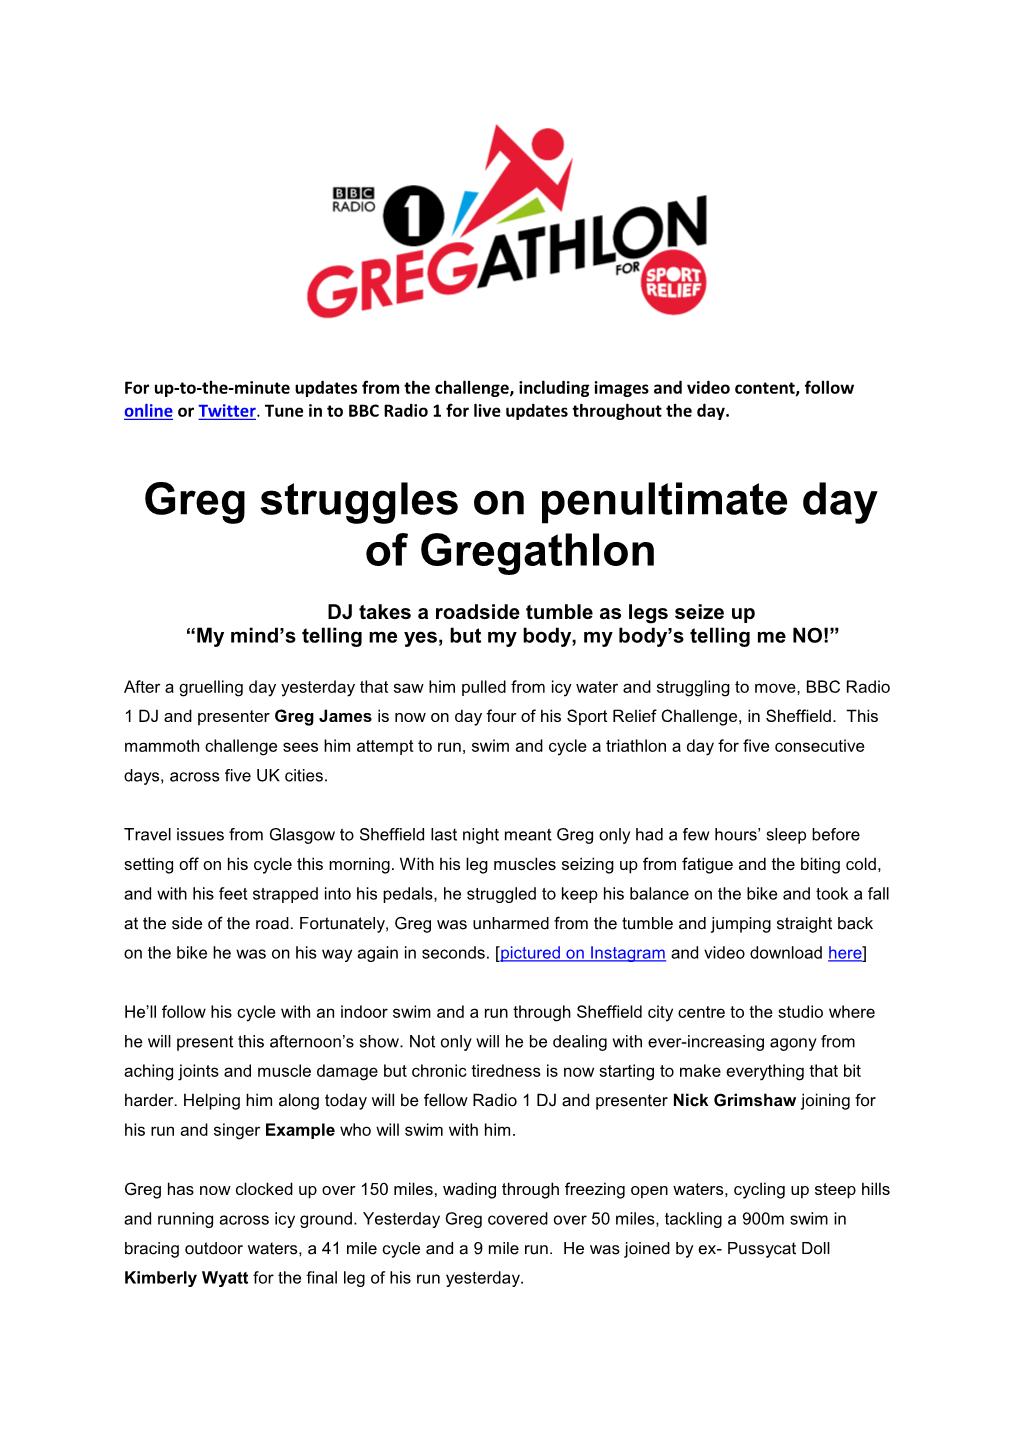 Greg Struggles on Penultimate Day of Gregathlon